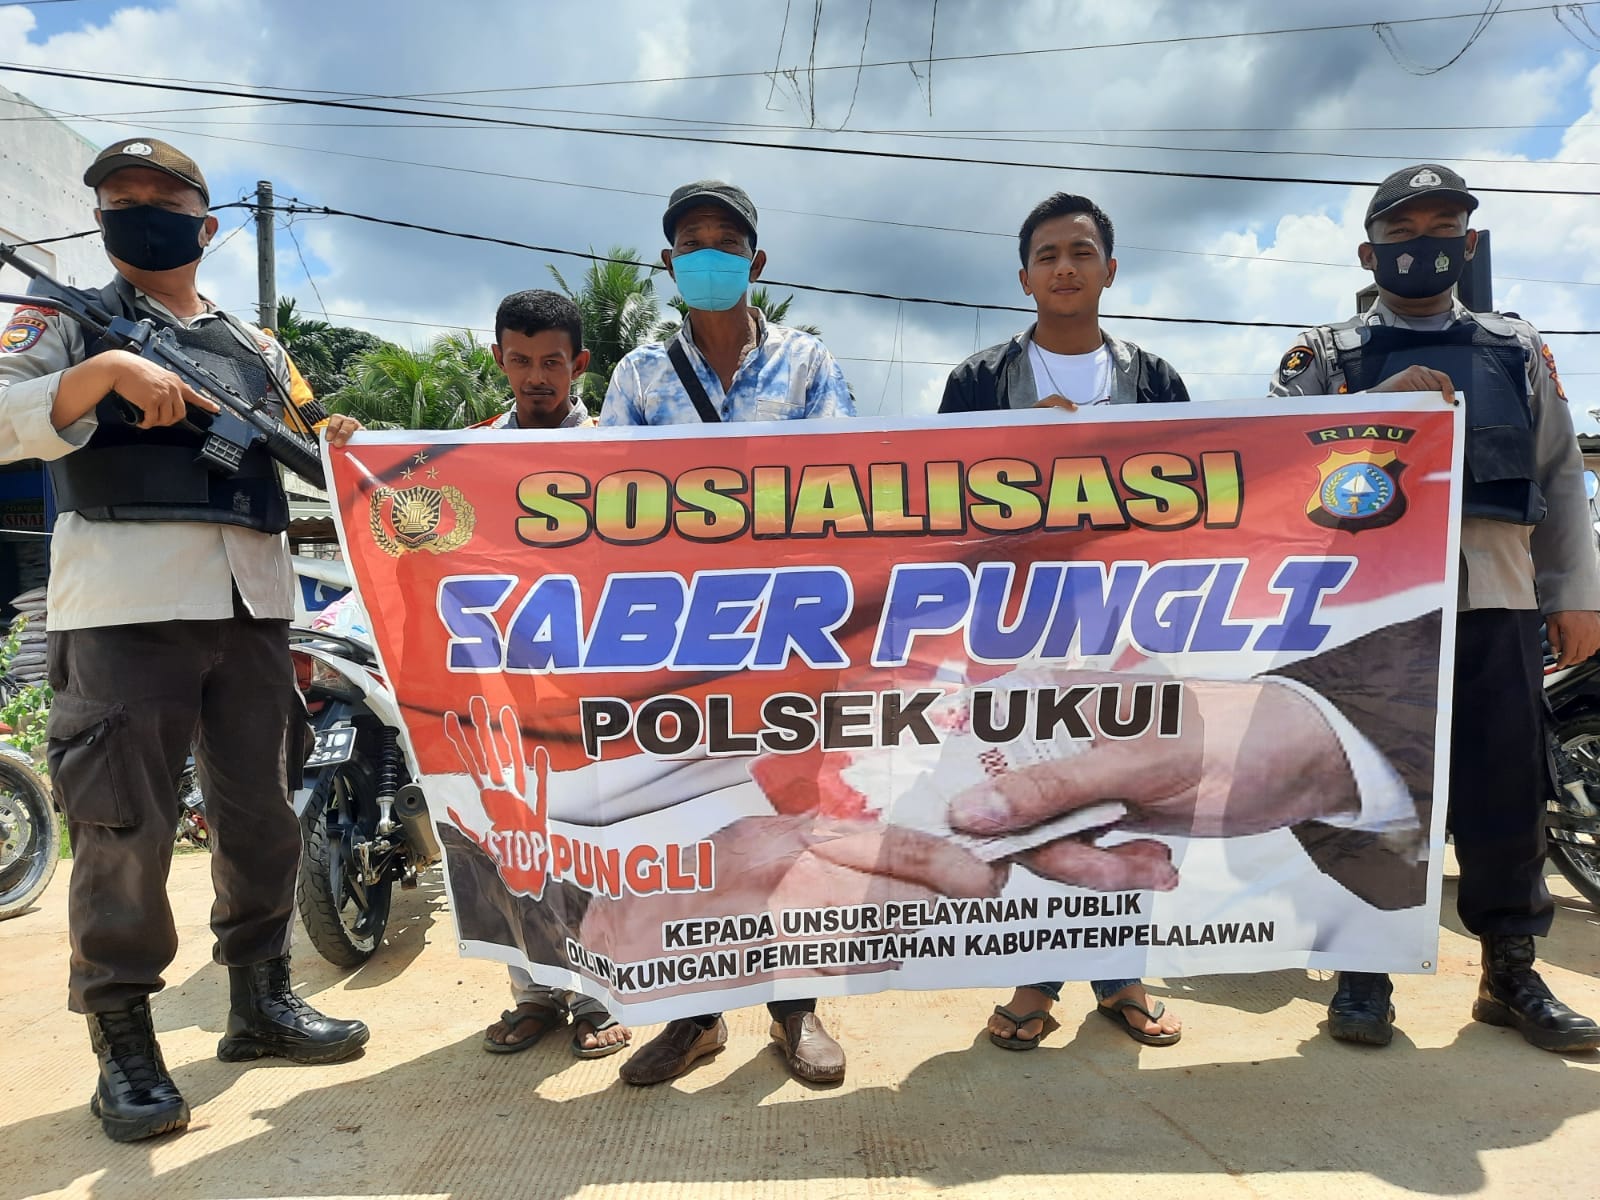 Sosialisasi Saber Pungli, Polisi Ukui Ajak Masyarakat Berperan Berantas Pungli